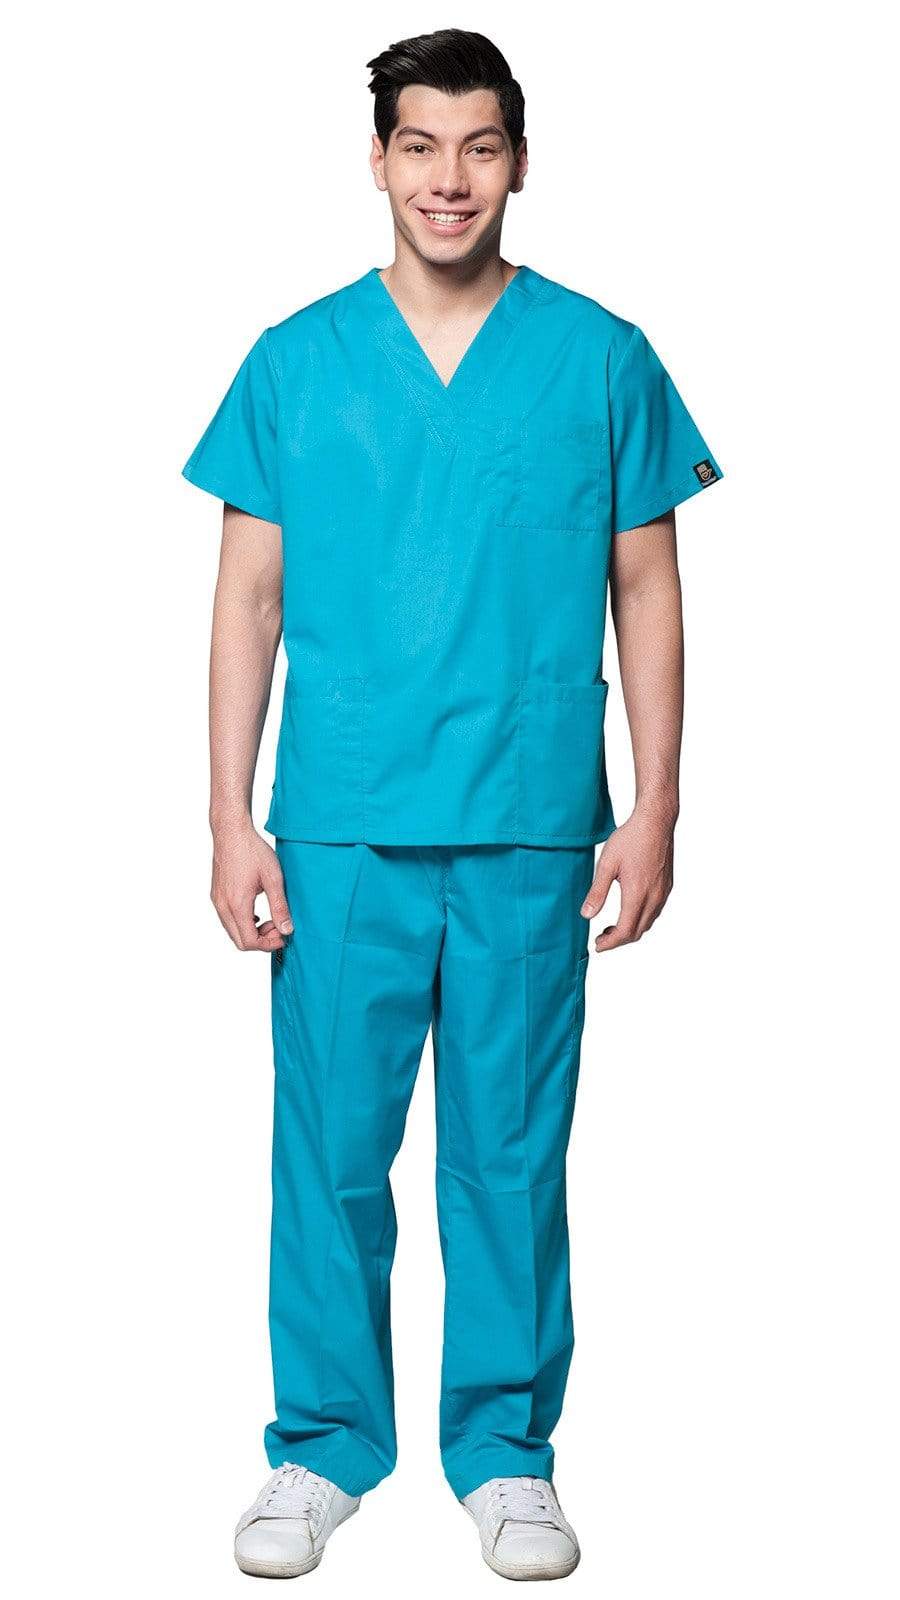 Dress A Med Men's Classic 7 Pocket Basic Uniform Scrubs